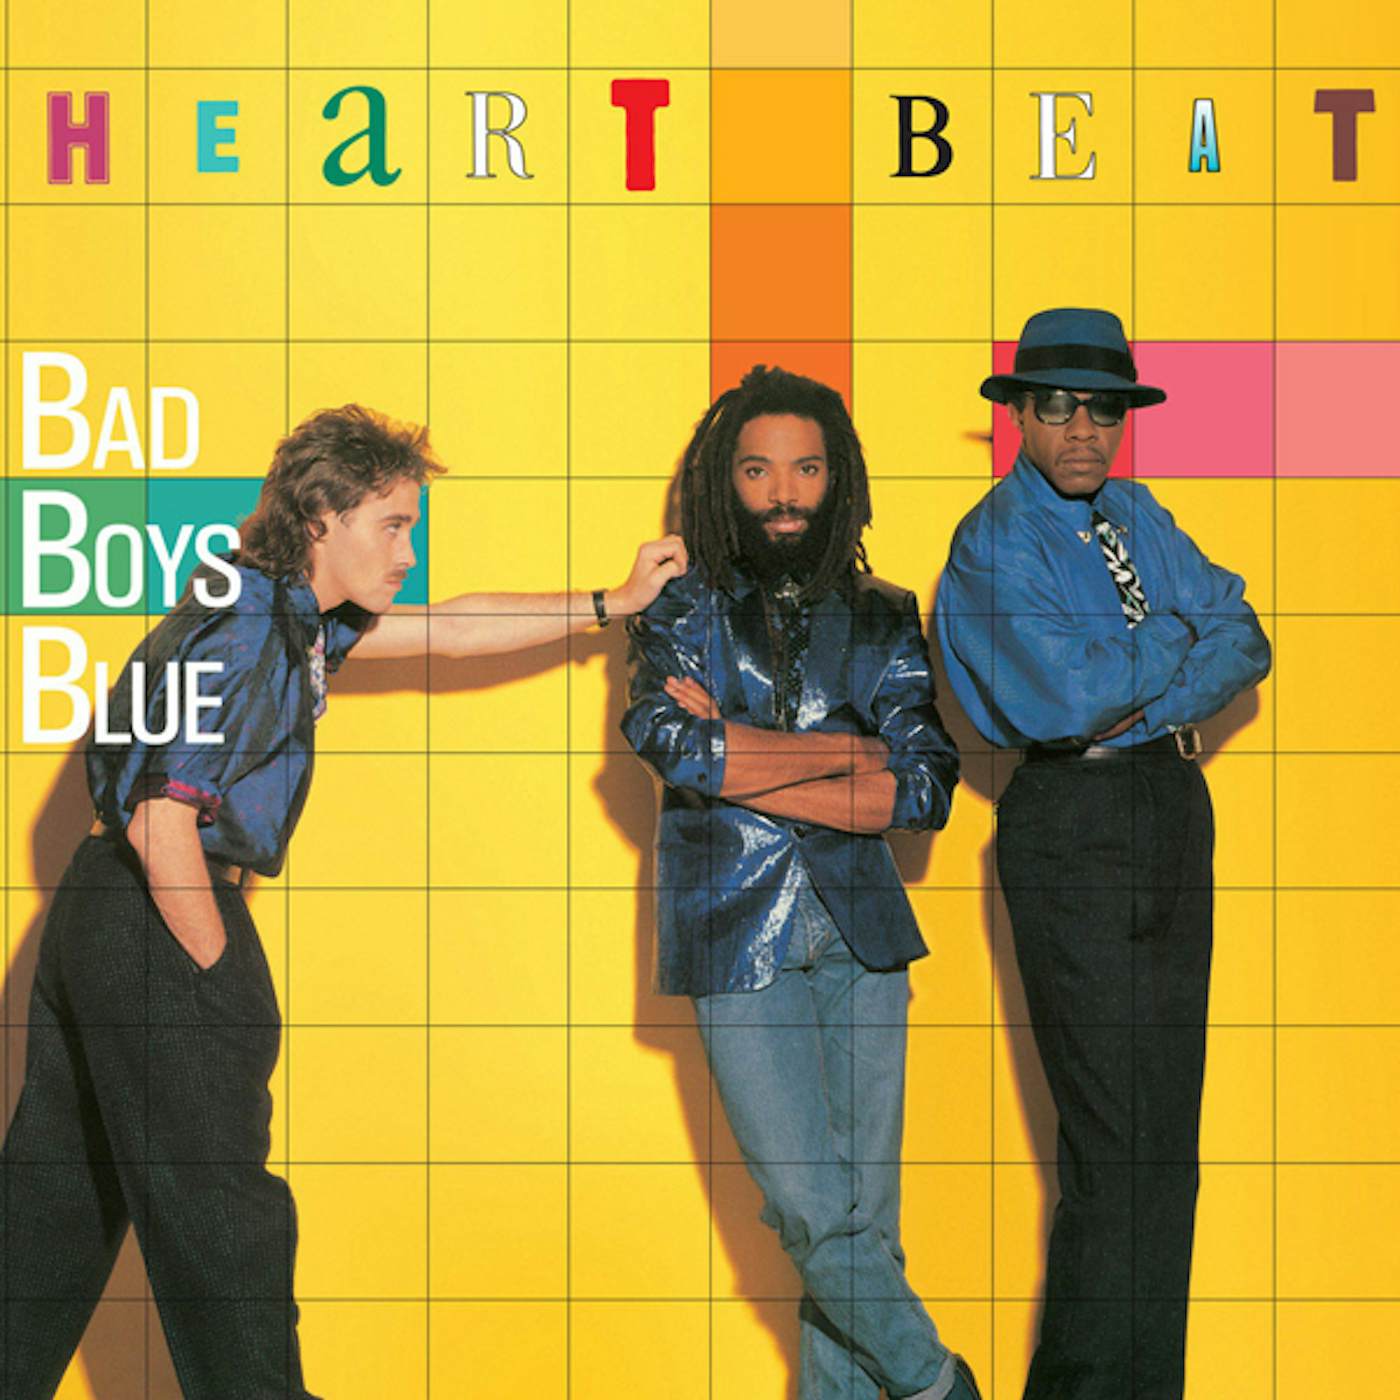 Bad Boys Blue HEART BEAT Vinyl Record